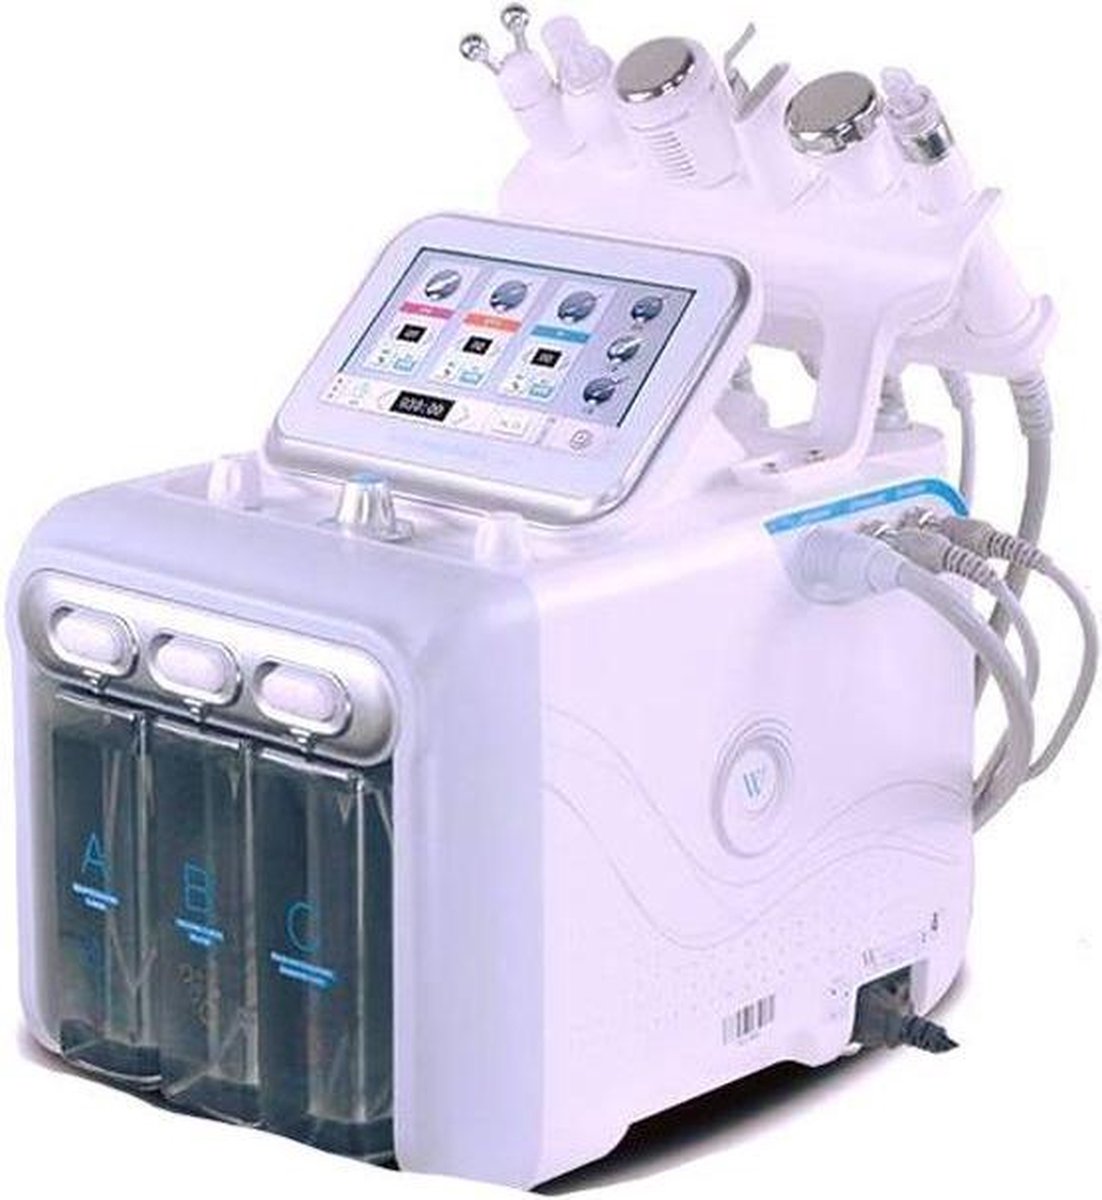 6 in 1 water-zuurstof hydrafacial machine, huidverzorging - diepe reiniging [ons]